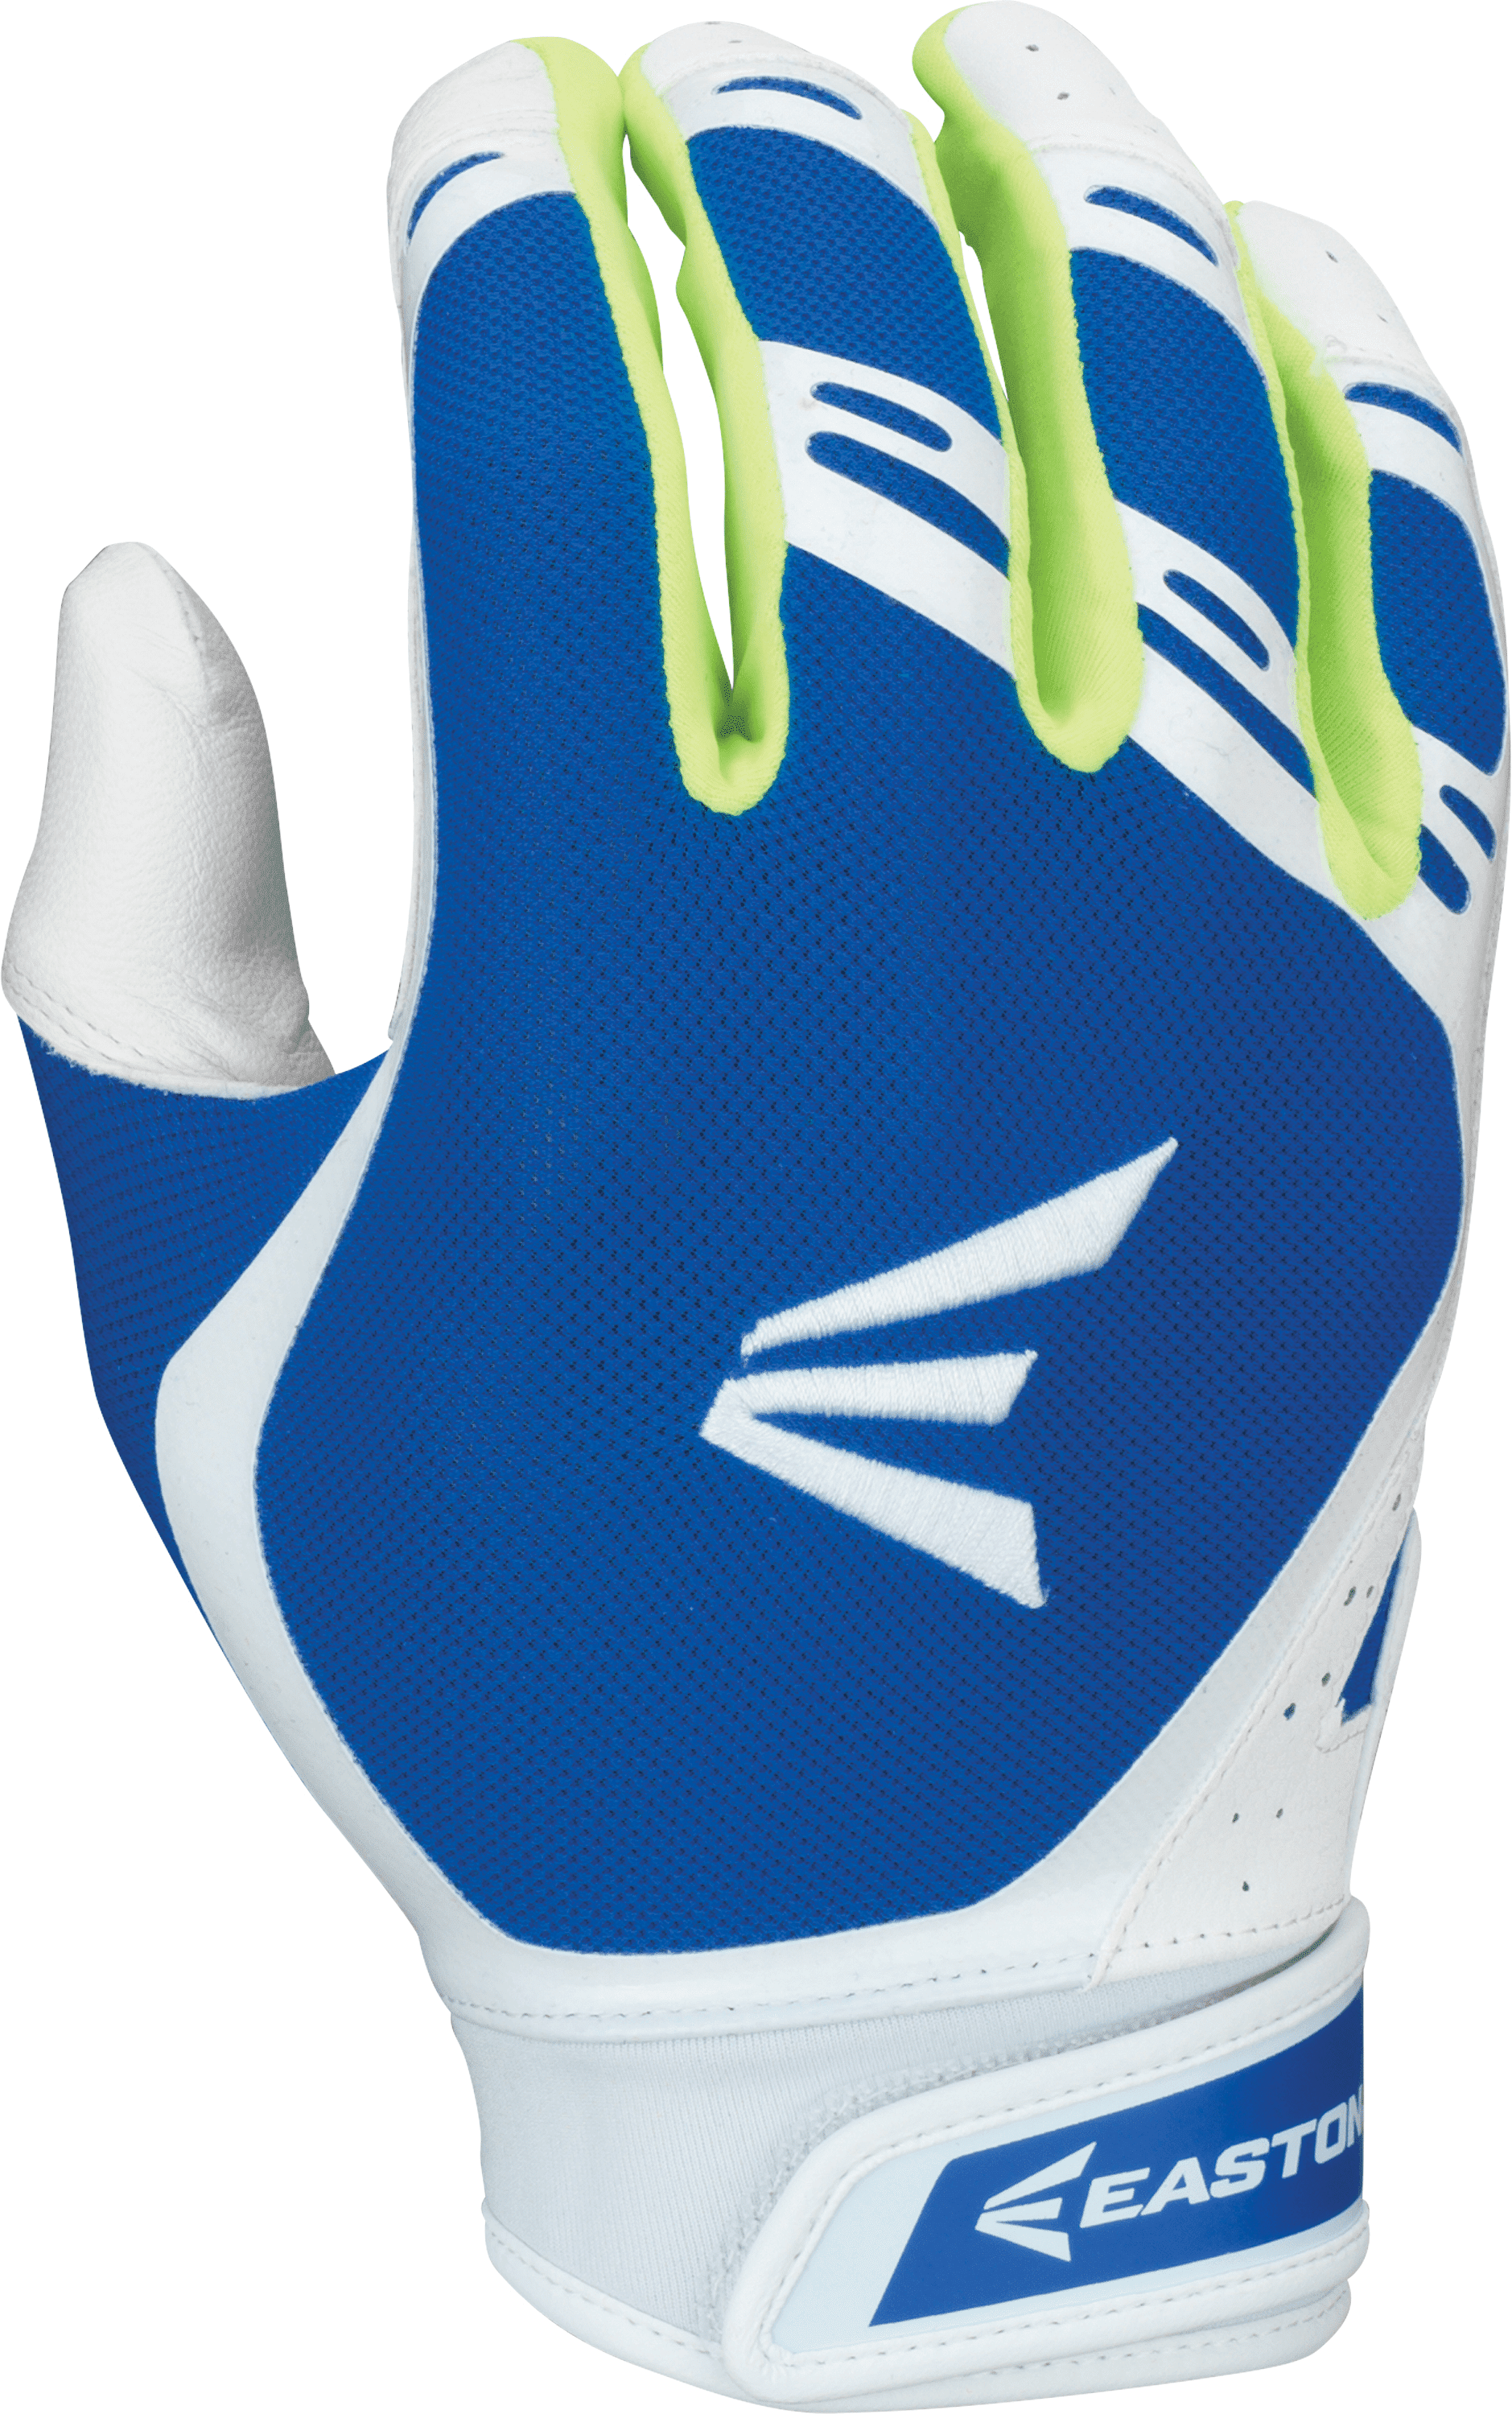 Easton Hyperskin HF7 Fastpitch Batting Gloves 